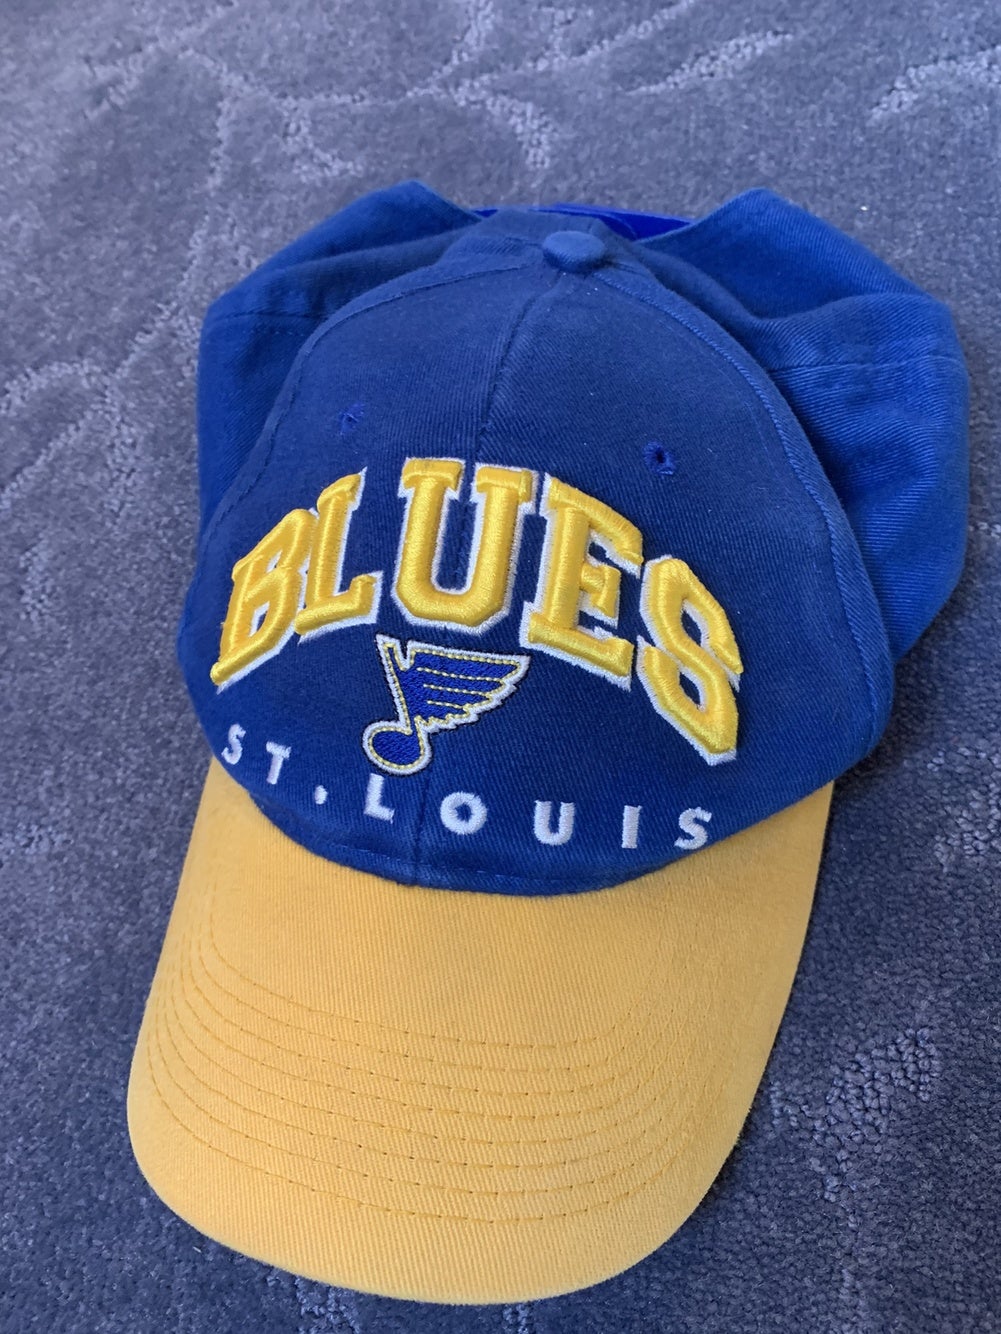 Vintage Sports Specialties NHL St. Louis Blues Hockey Snapback Cap Hat Blue